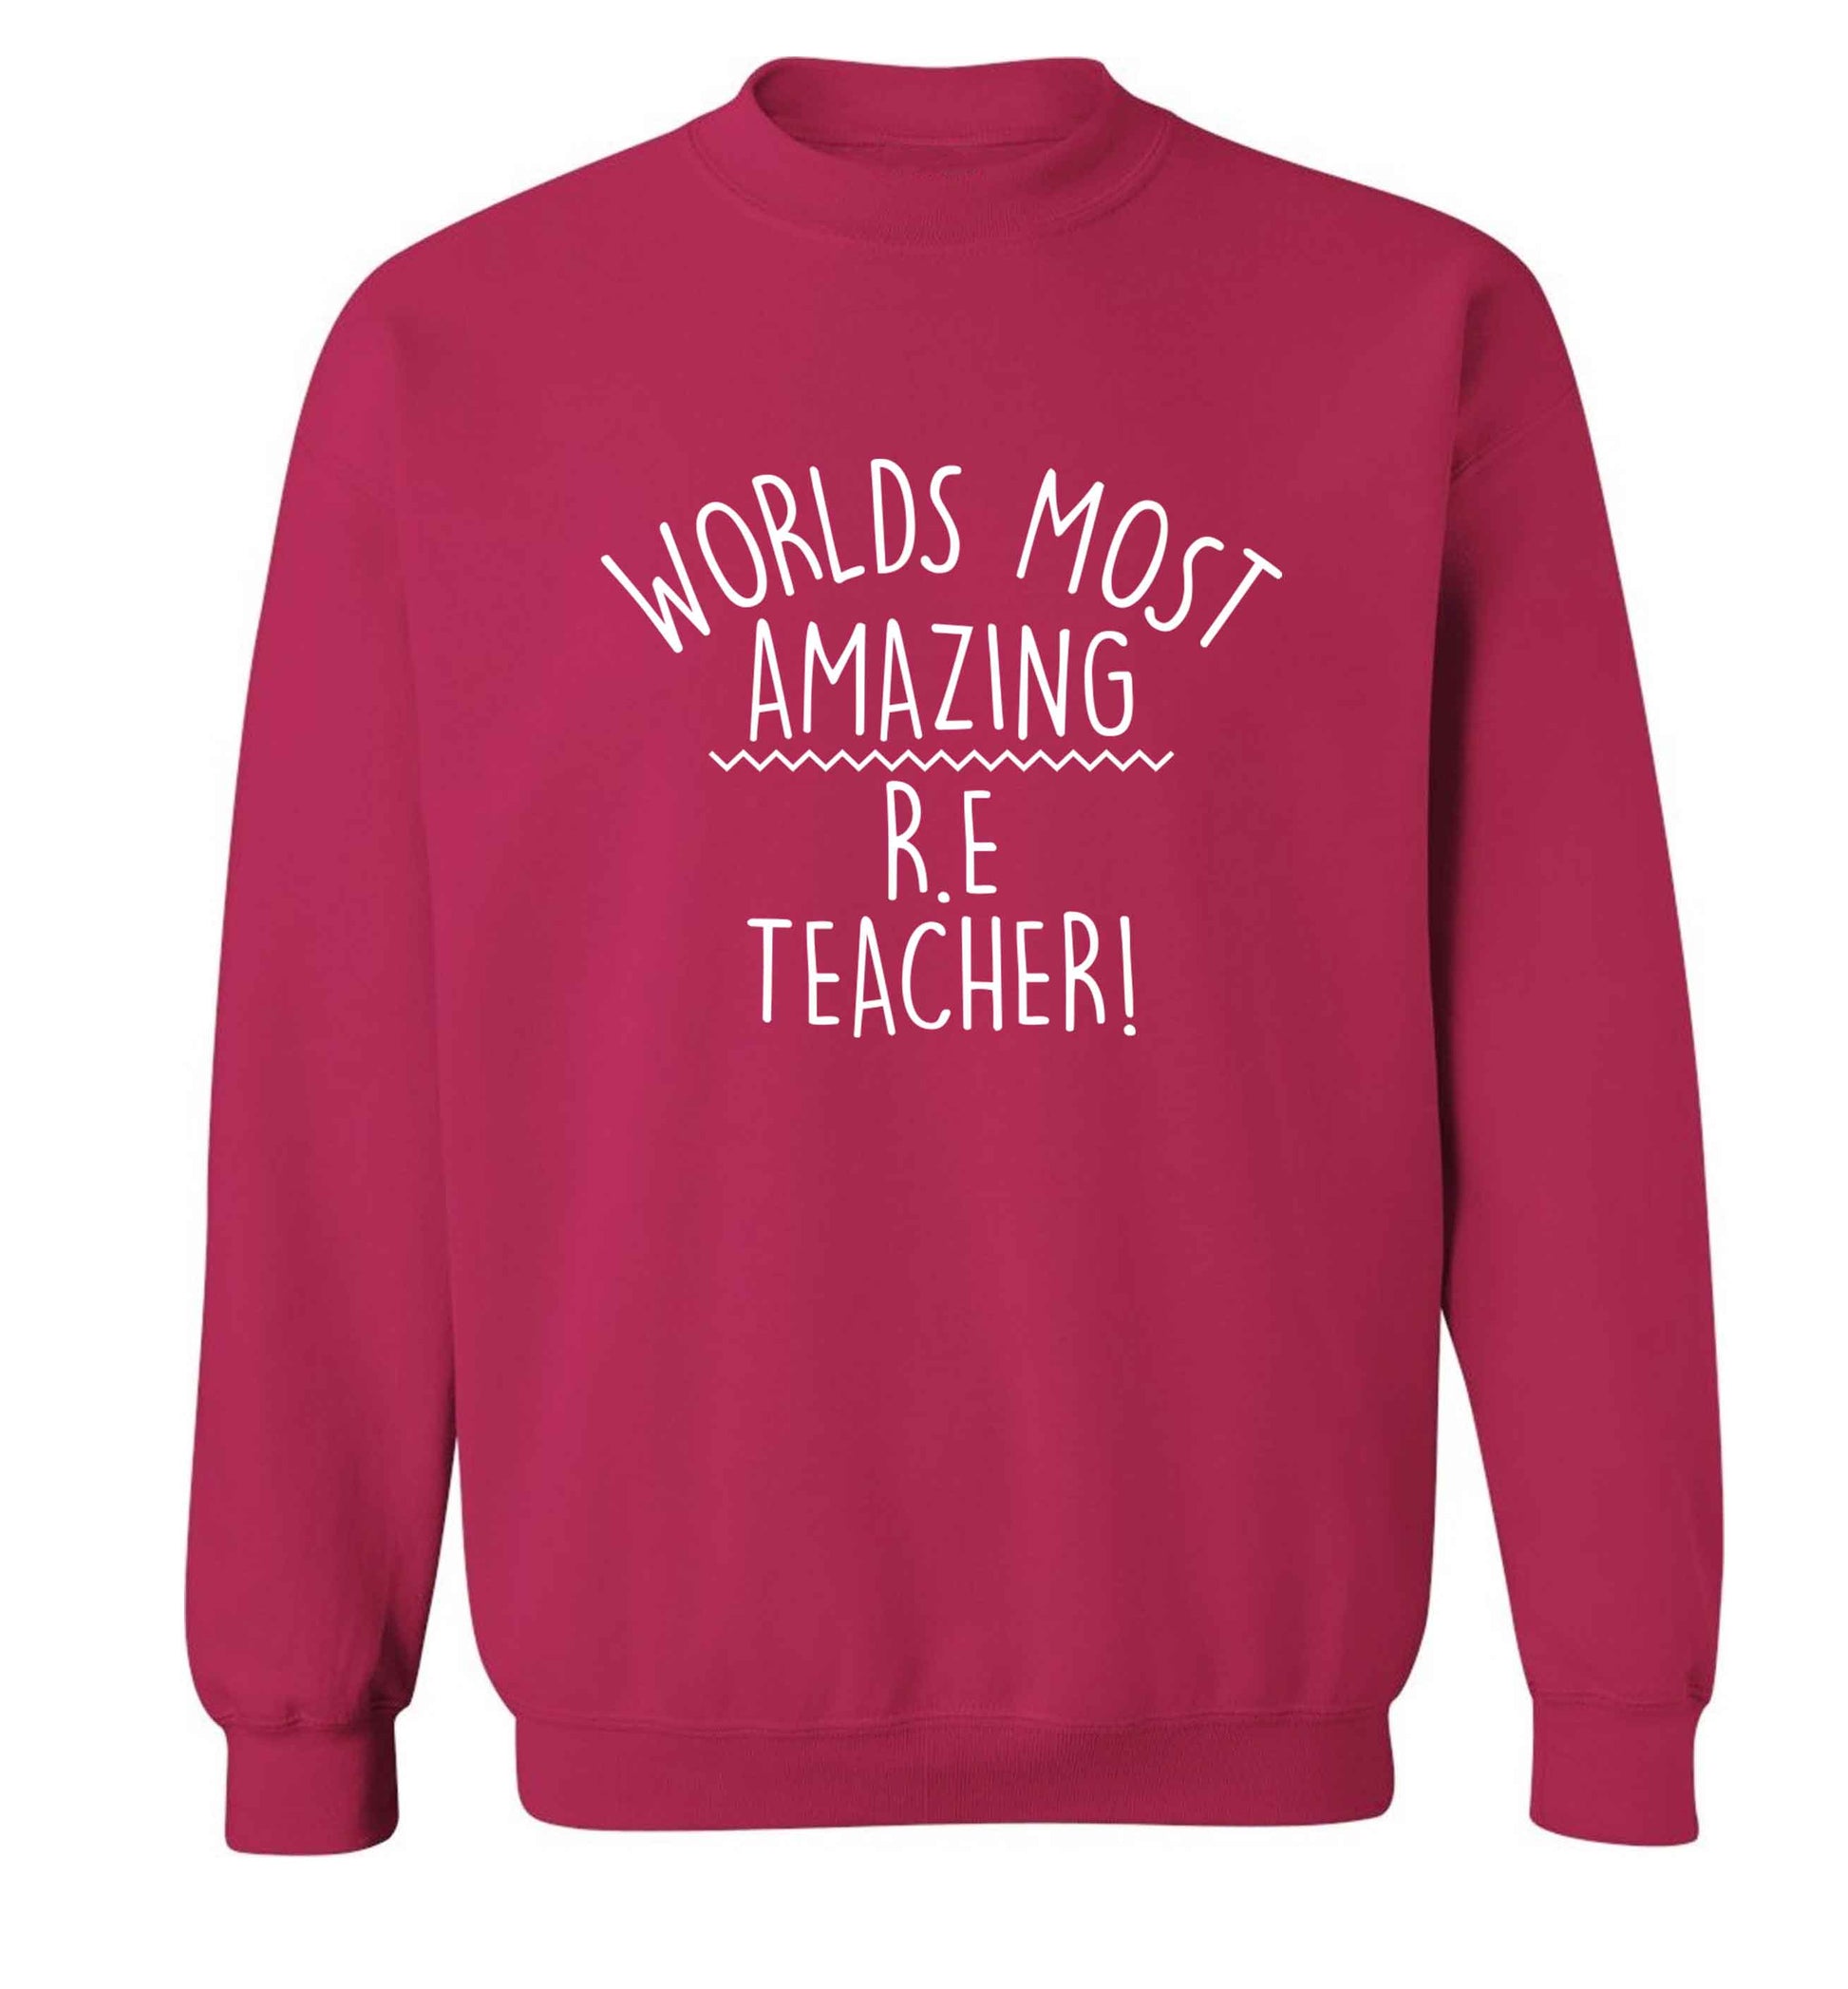 Worlds most amazing R.E teacher adult's unisex pink sweater 2XL